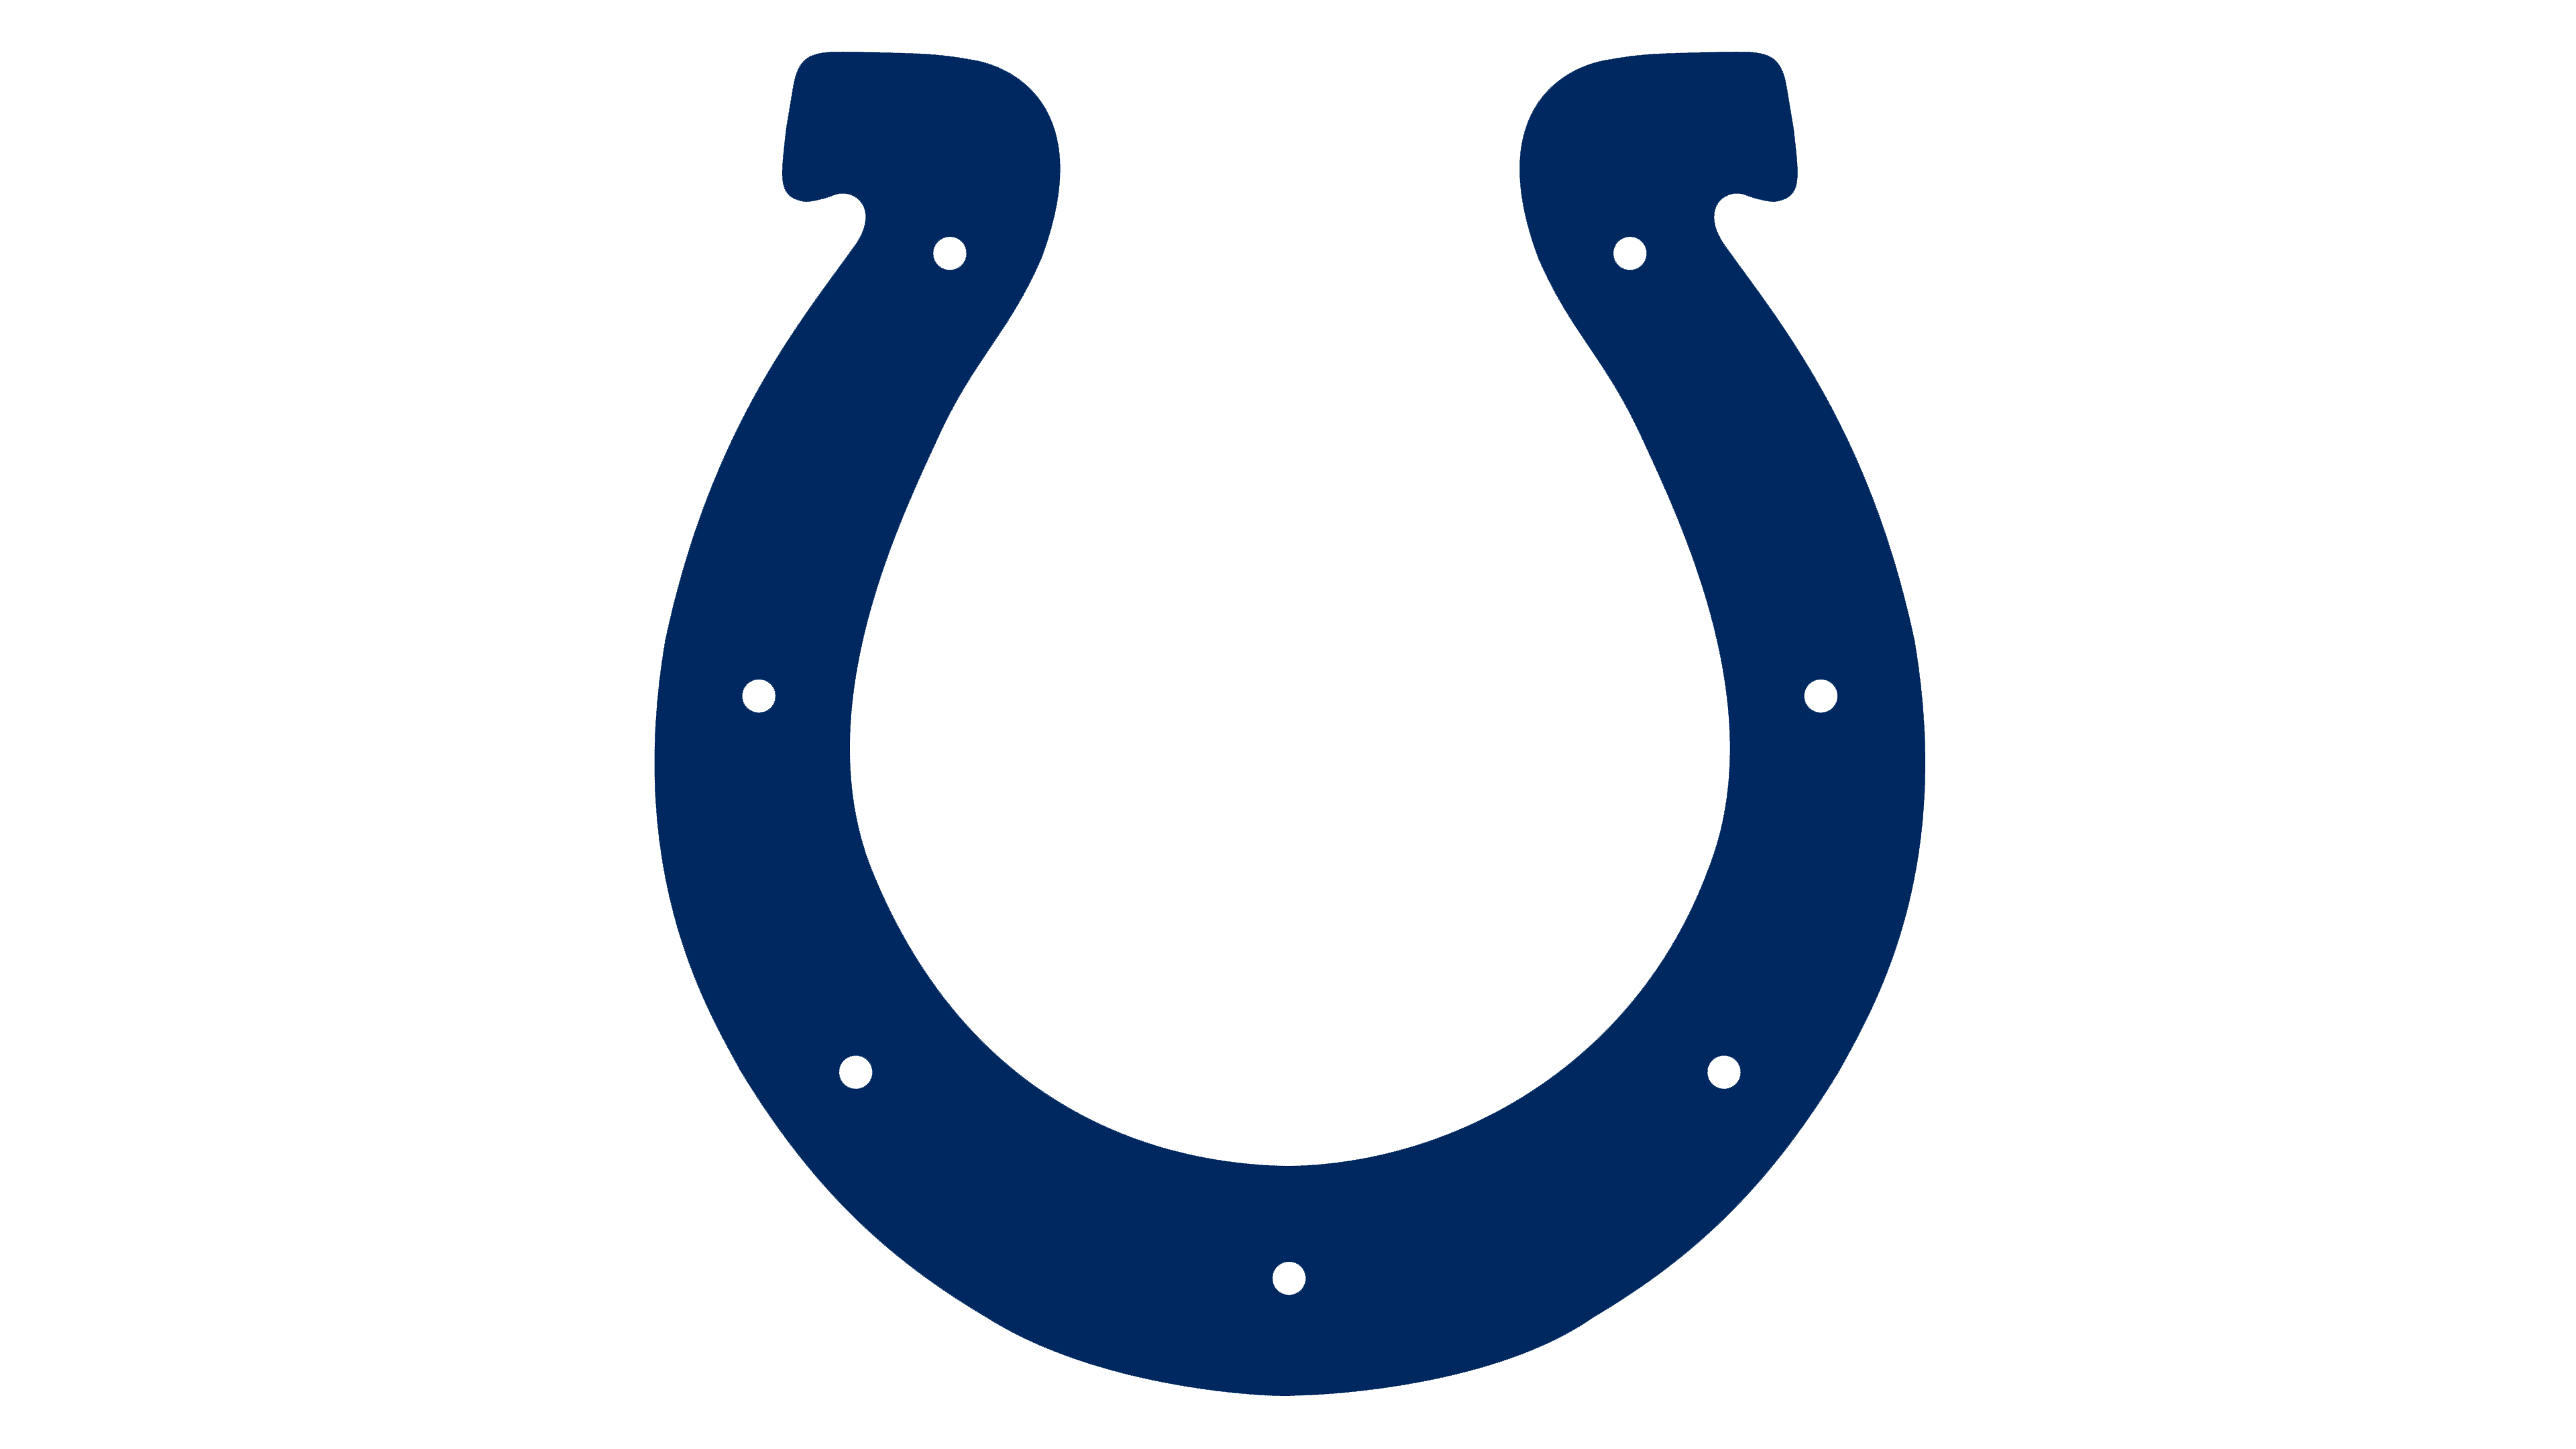 Colts Logo PNG Pic